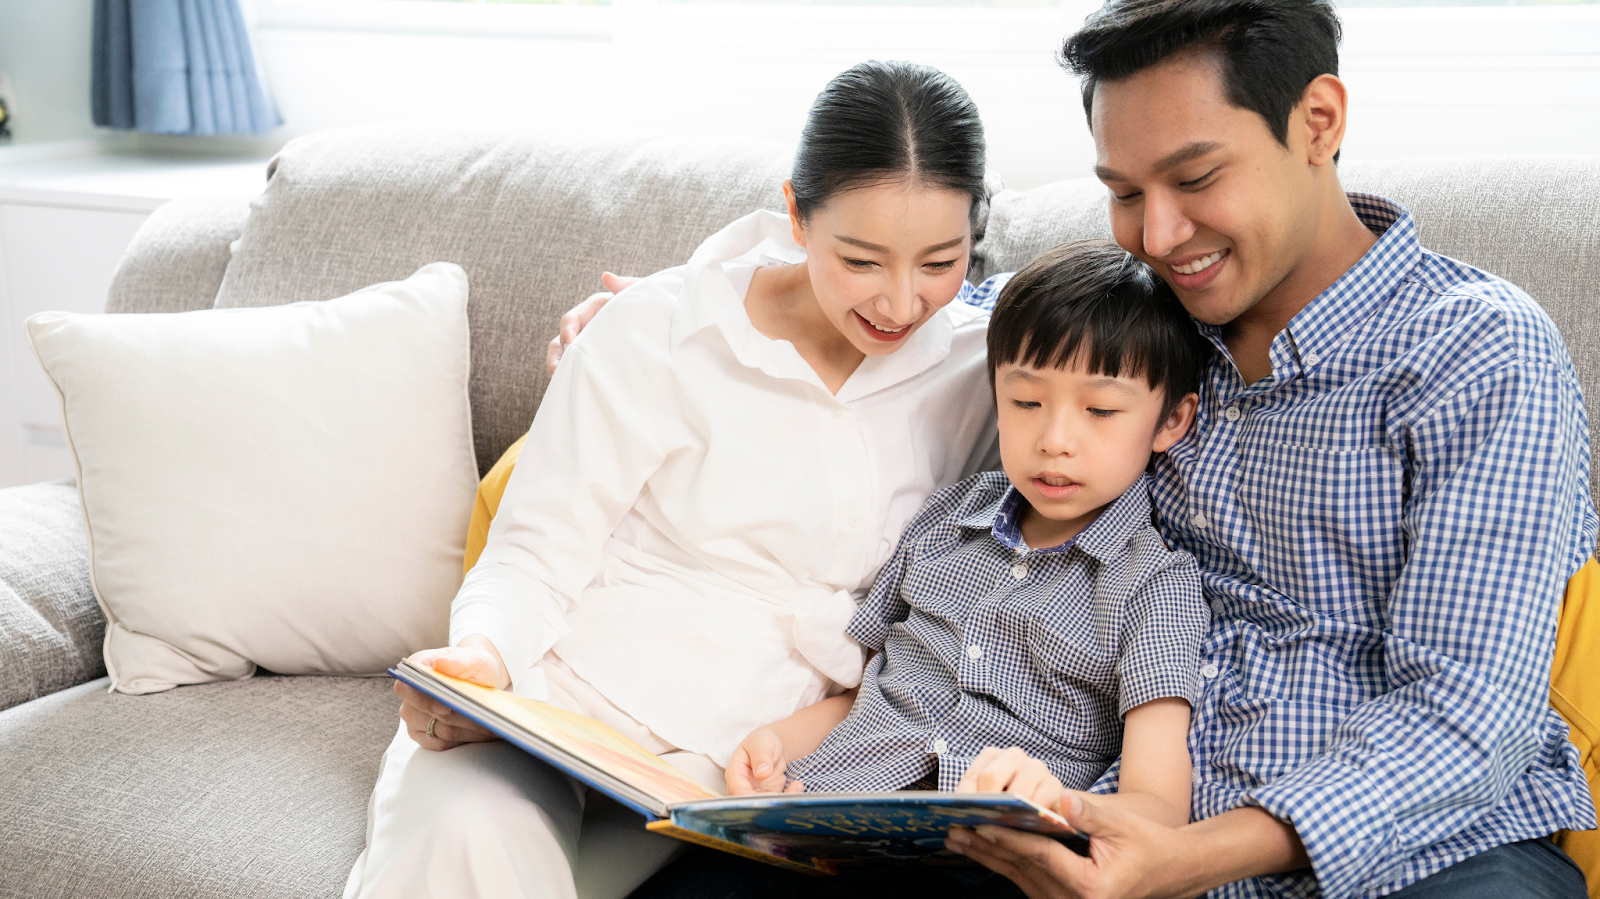 Parents reading aloud together